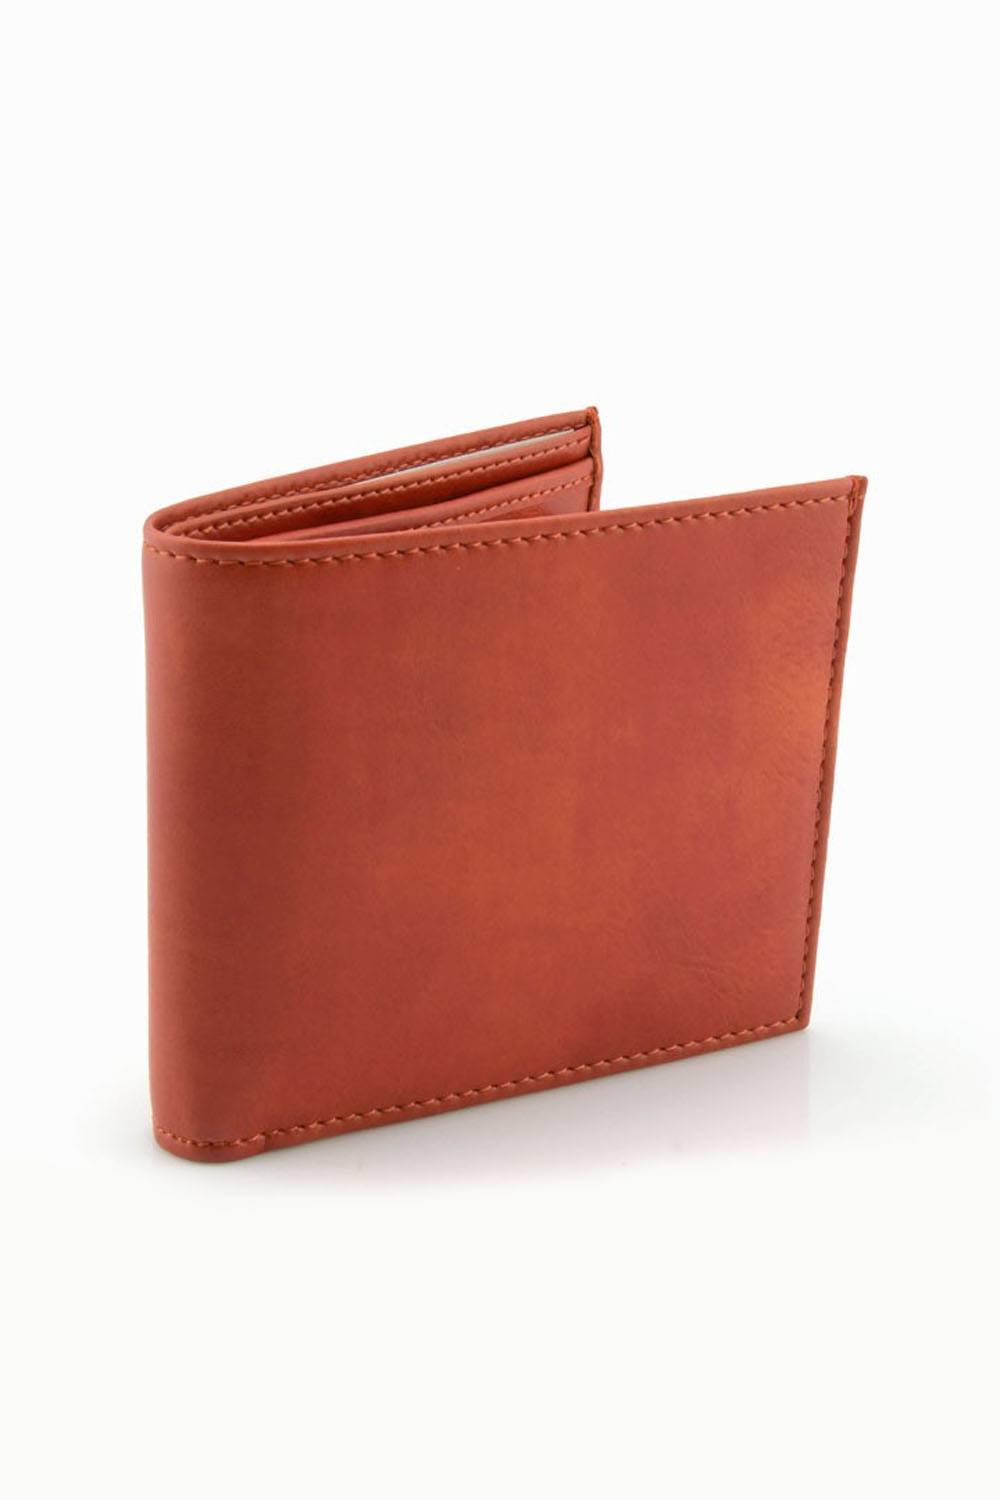 noah luxury vegan leather wallet